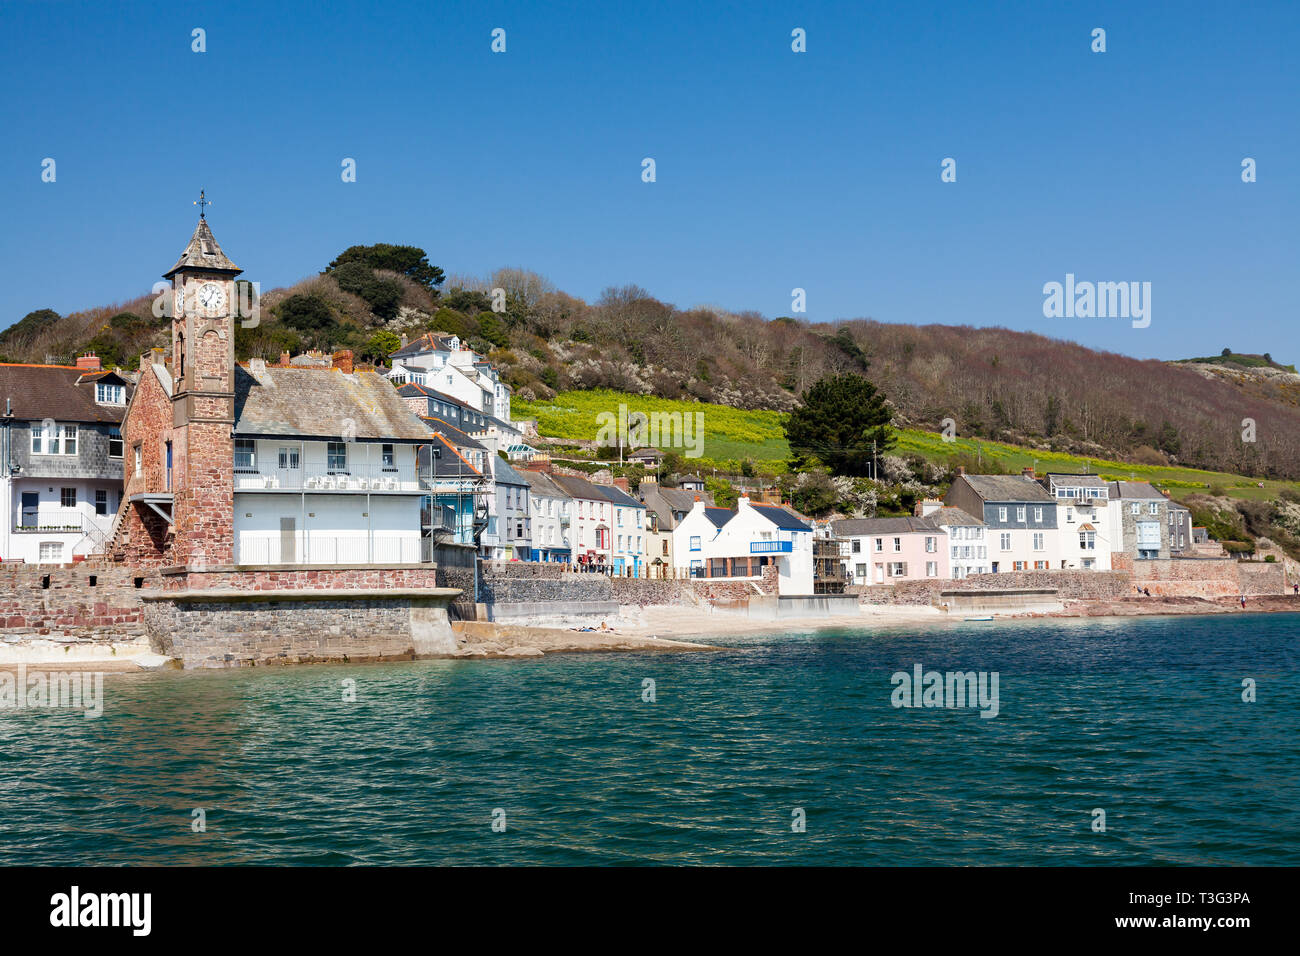 The sea front and historic clock tower at Kingsand a local landmark. Cornwall England UK Stock Photo